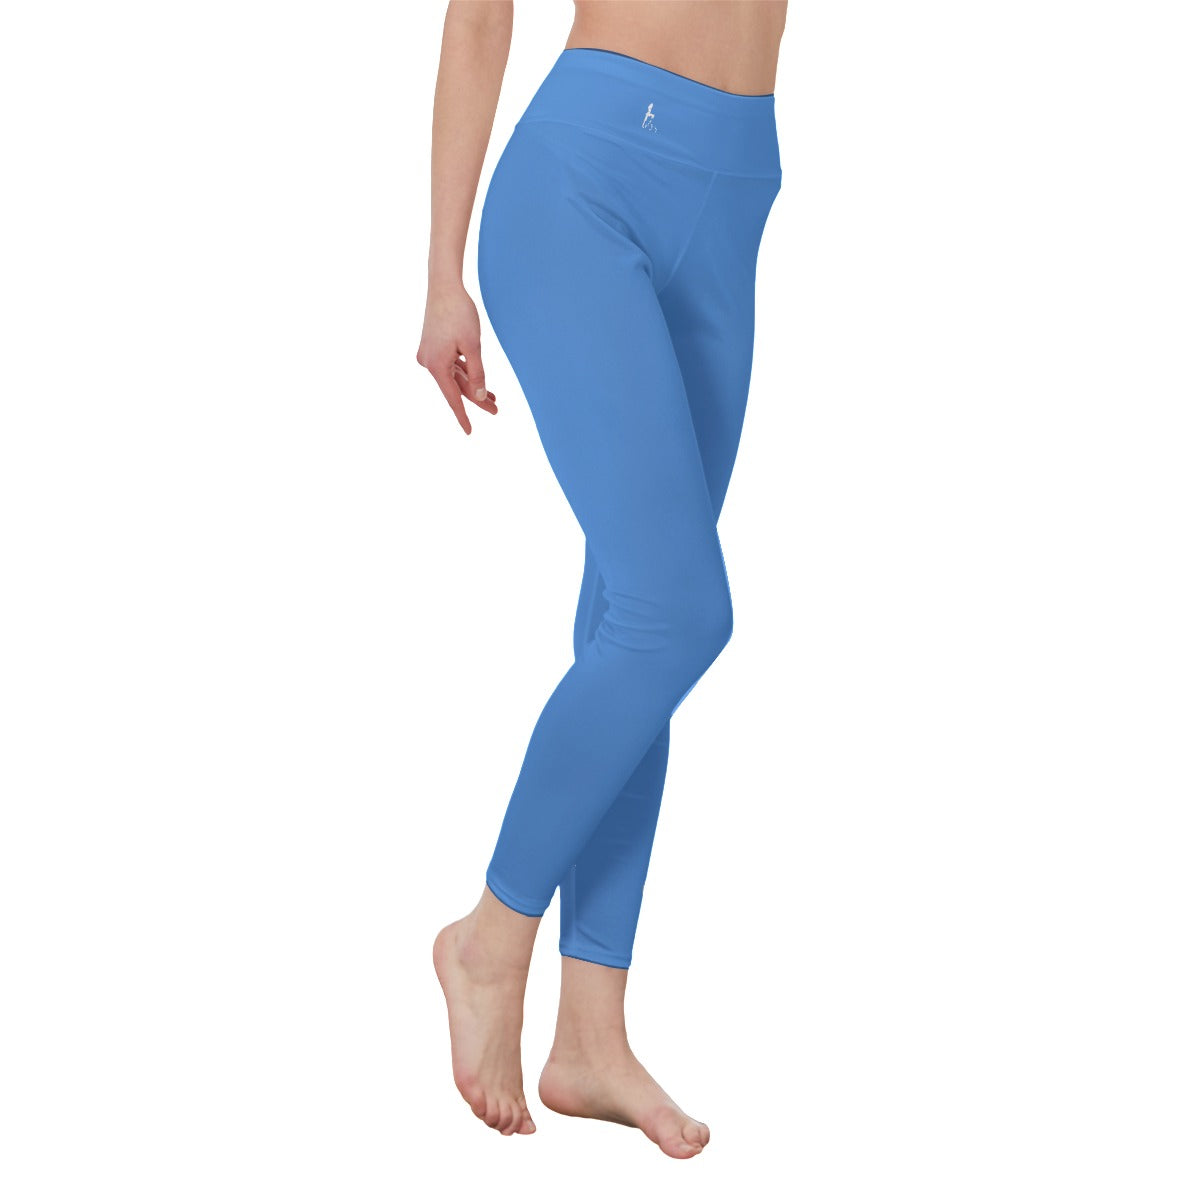 👖 Oficialmente Sexy Colors Collection Cornflower Blue With White Logo Women's High Waist Leggings Color #4A90E2 👖